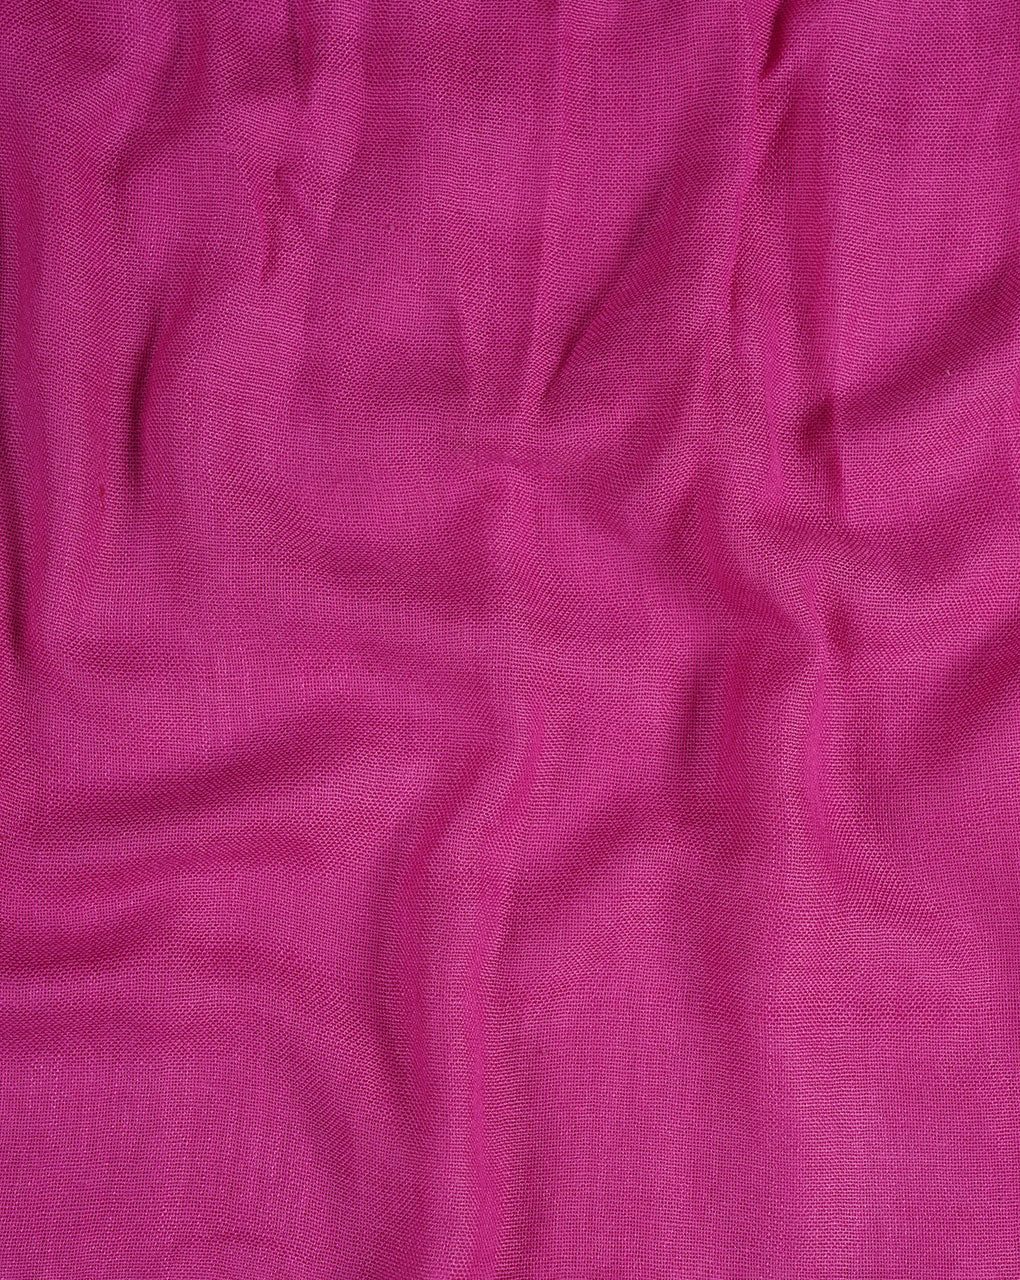 Purple Woven Bhagalpuri Viscose Stole - Fabriclore.com